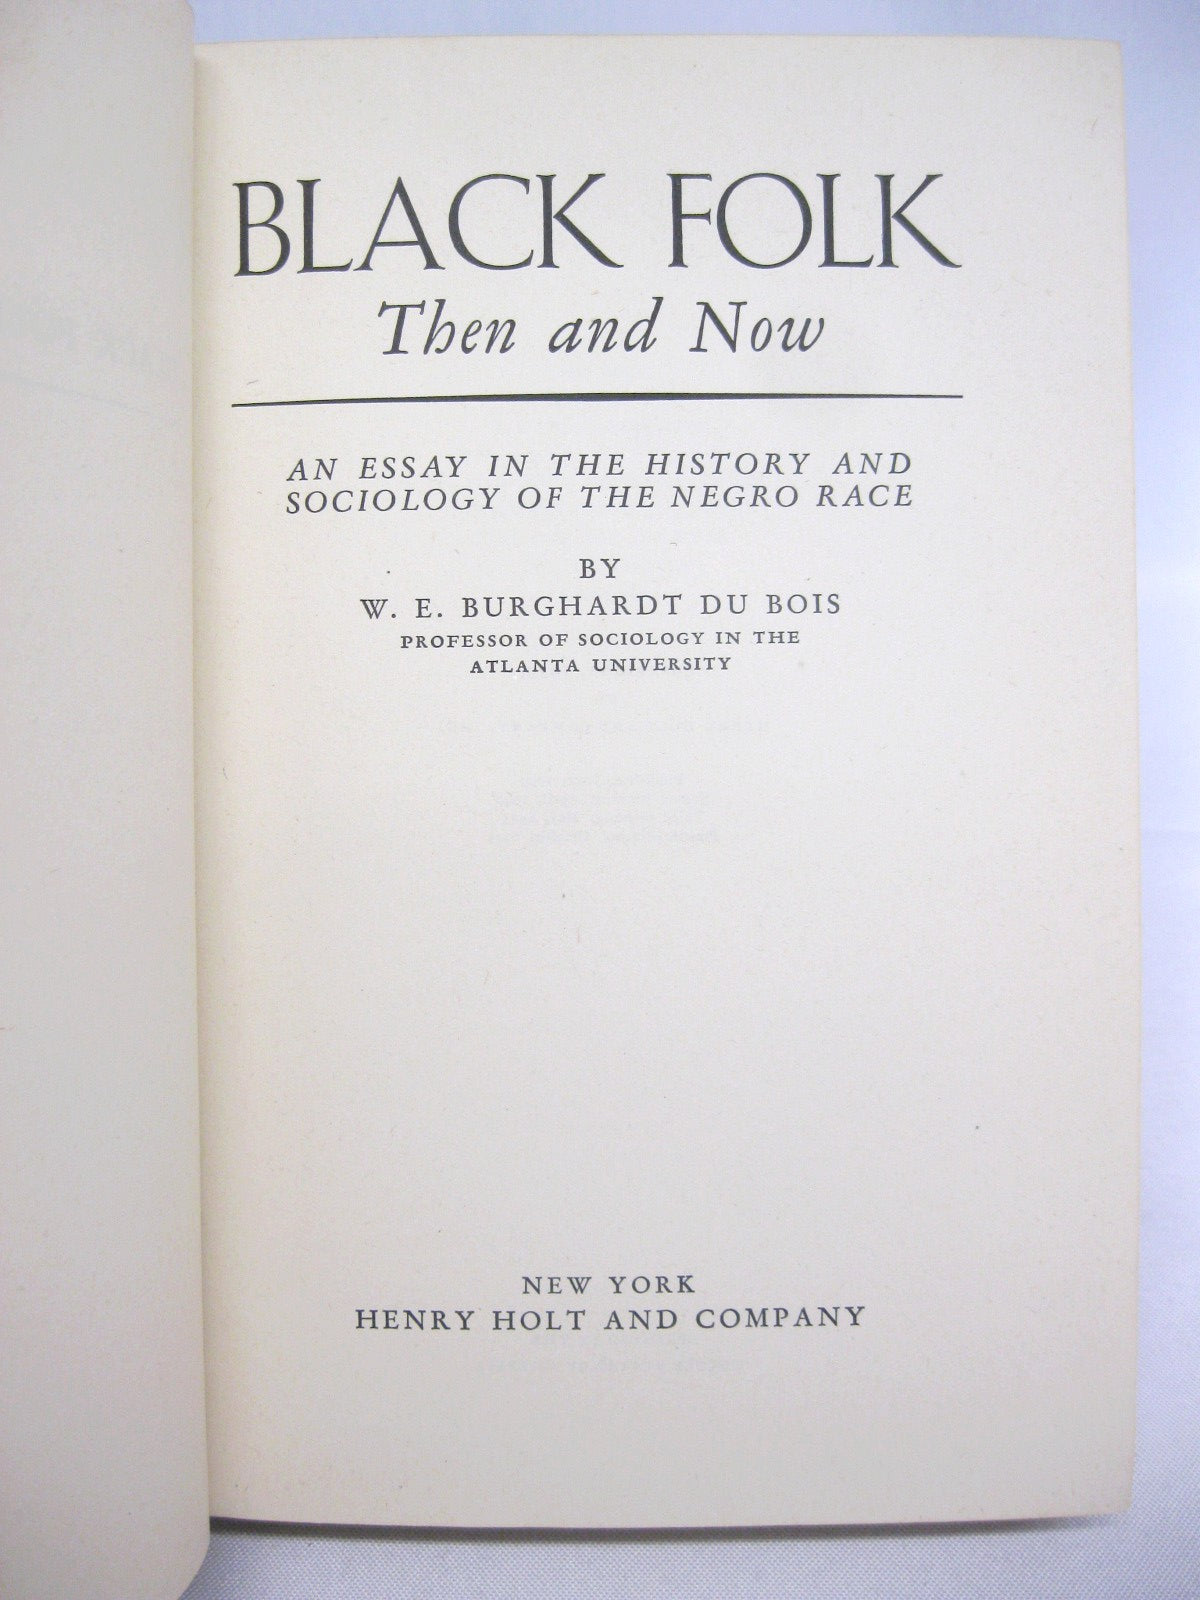 Black Folk Then and Now by W.E.B. du Bois